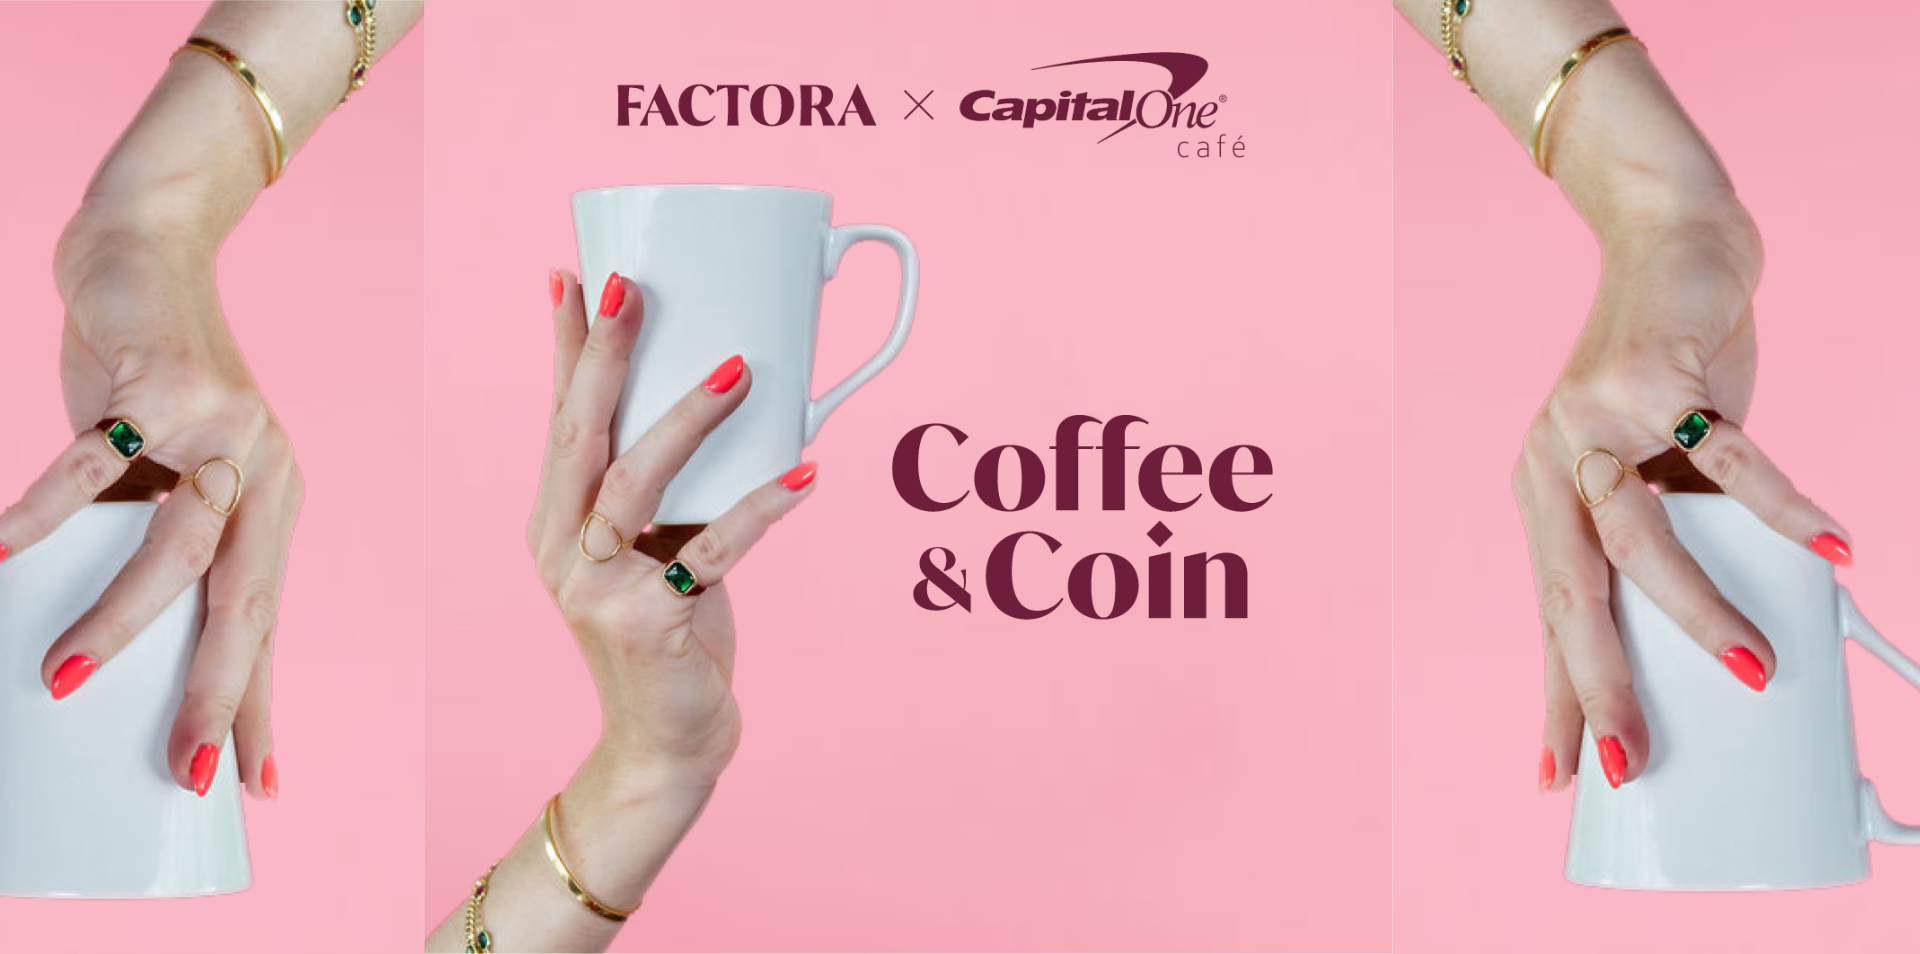 Factora X Capital One: February Coffee & Coin